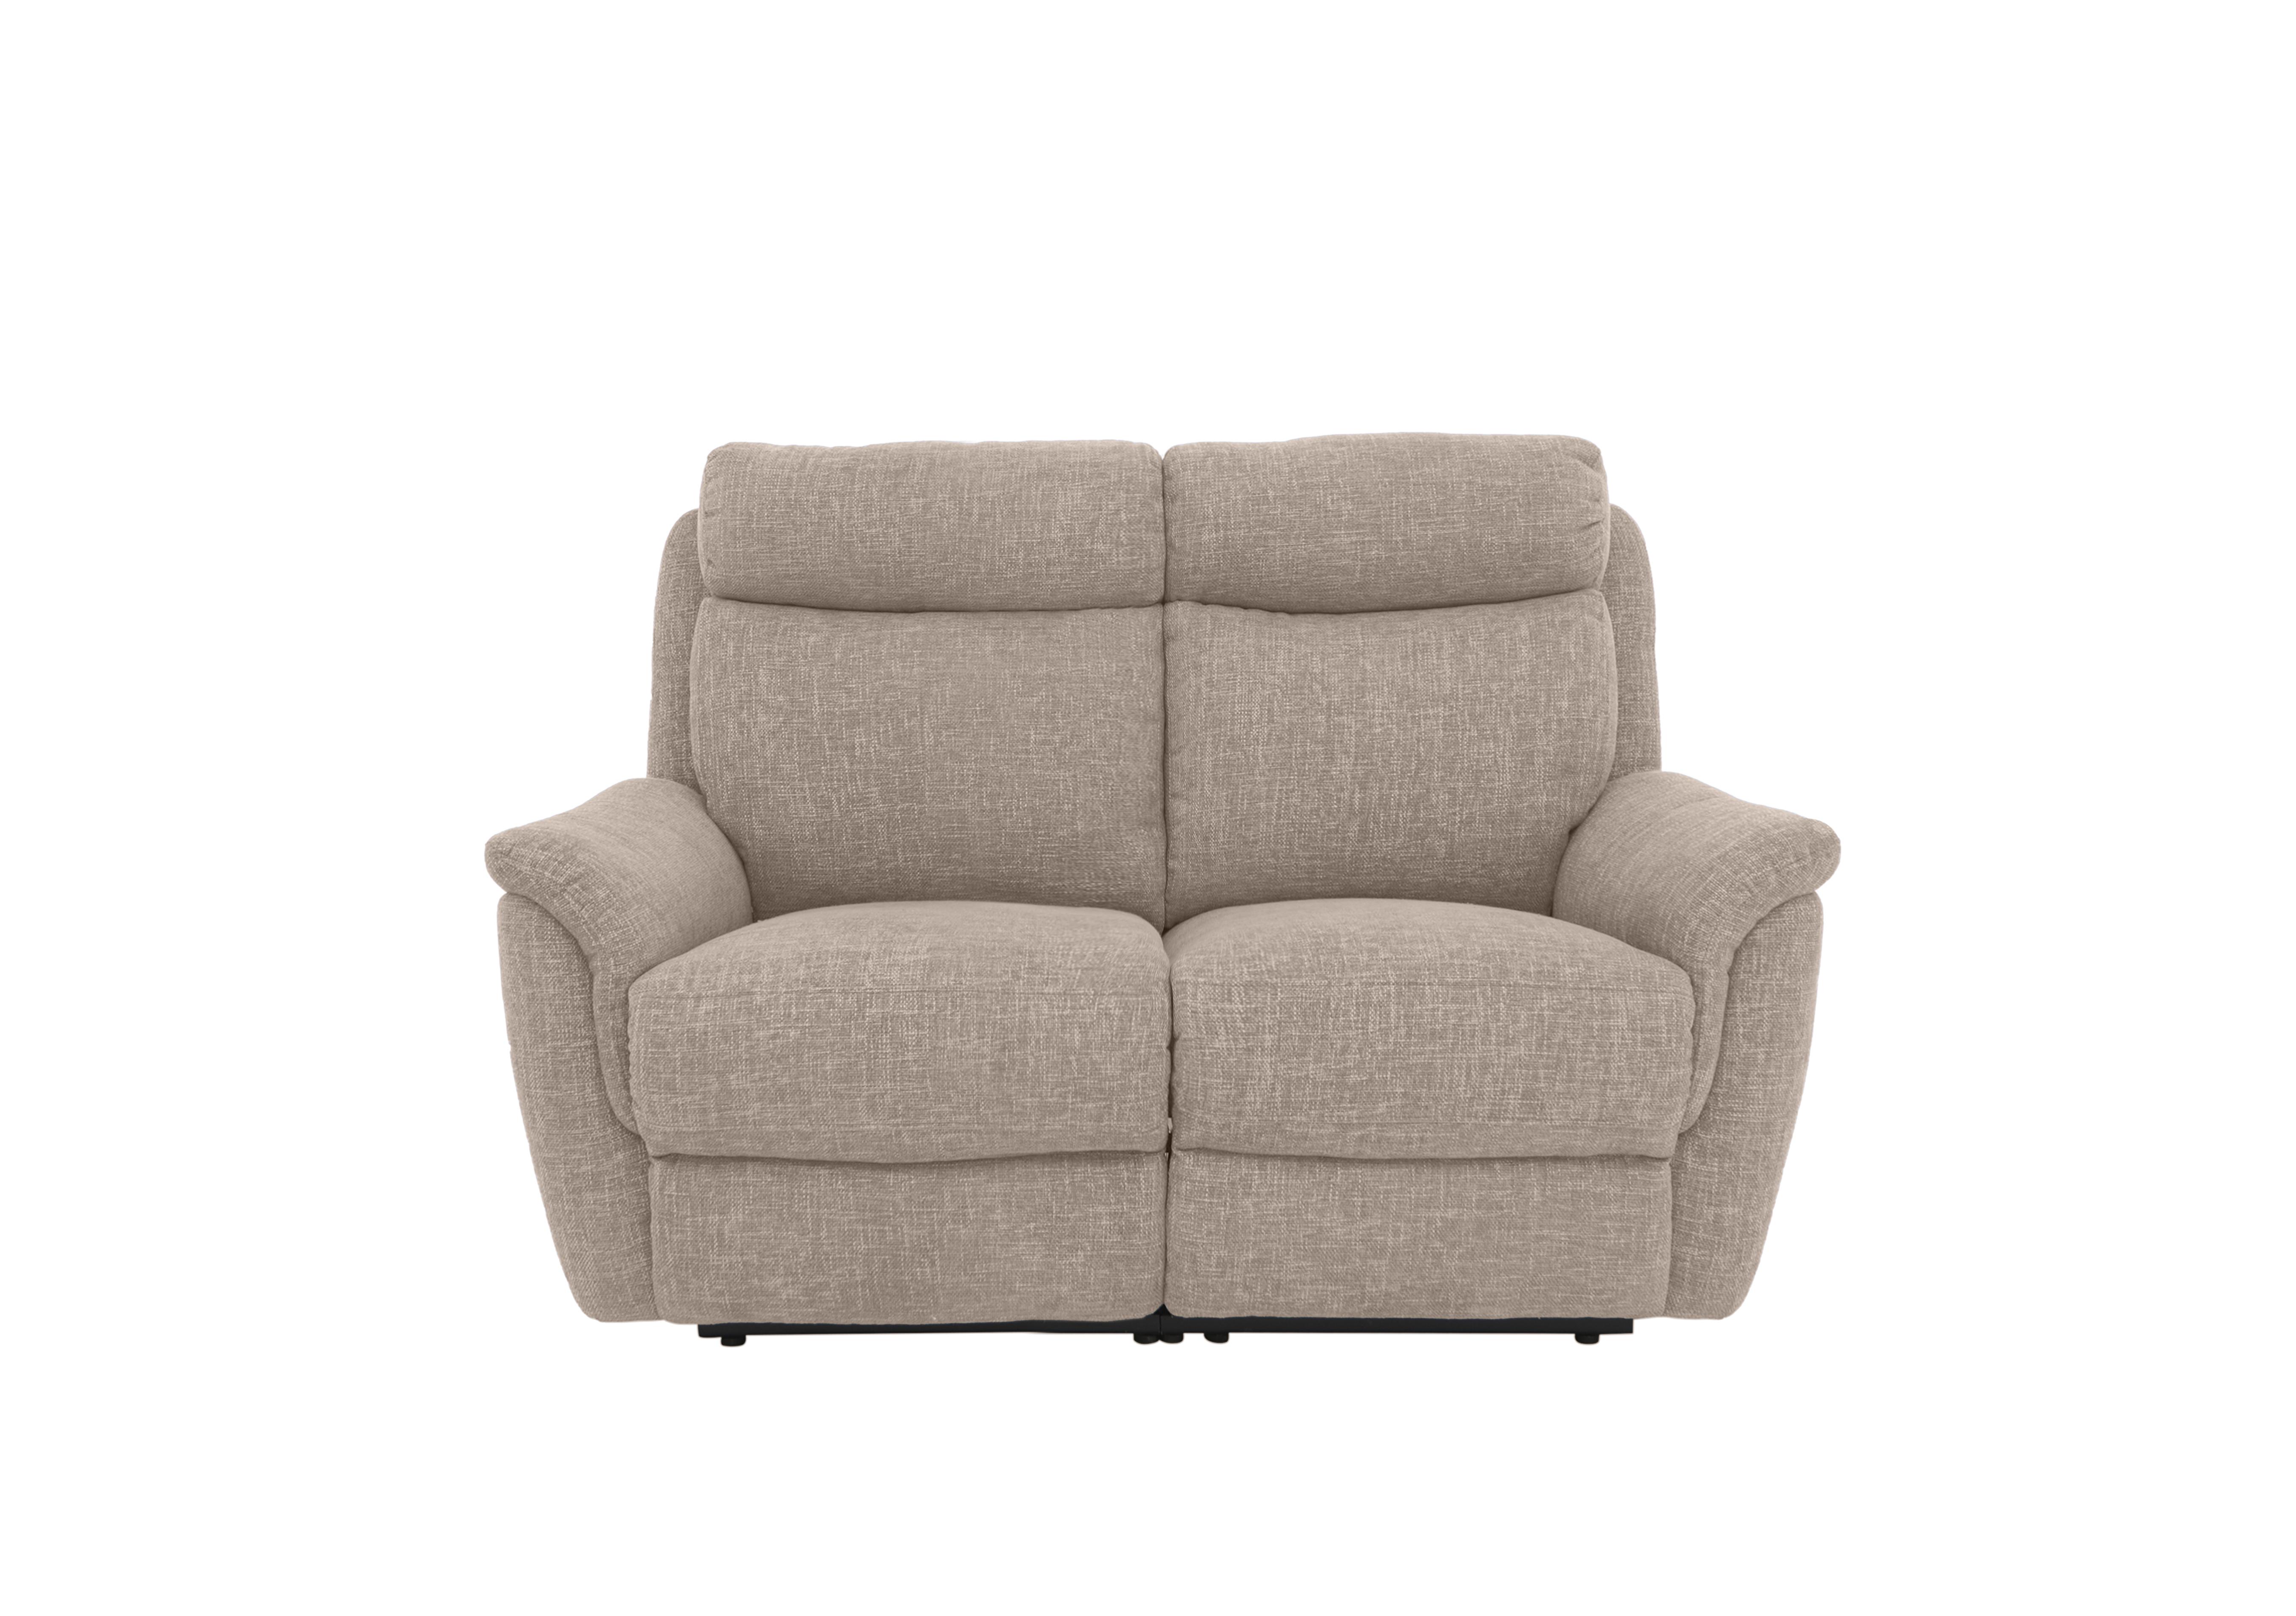 Orlando 2 Seater Fabric Sofa in Anivia Khaki 14445 on Furniture Village